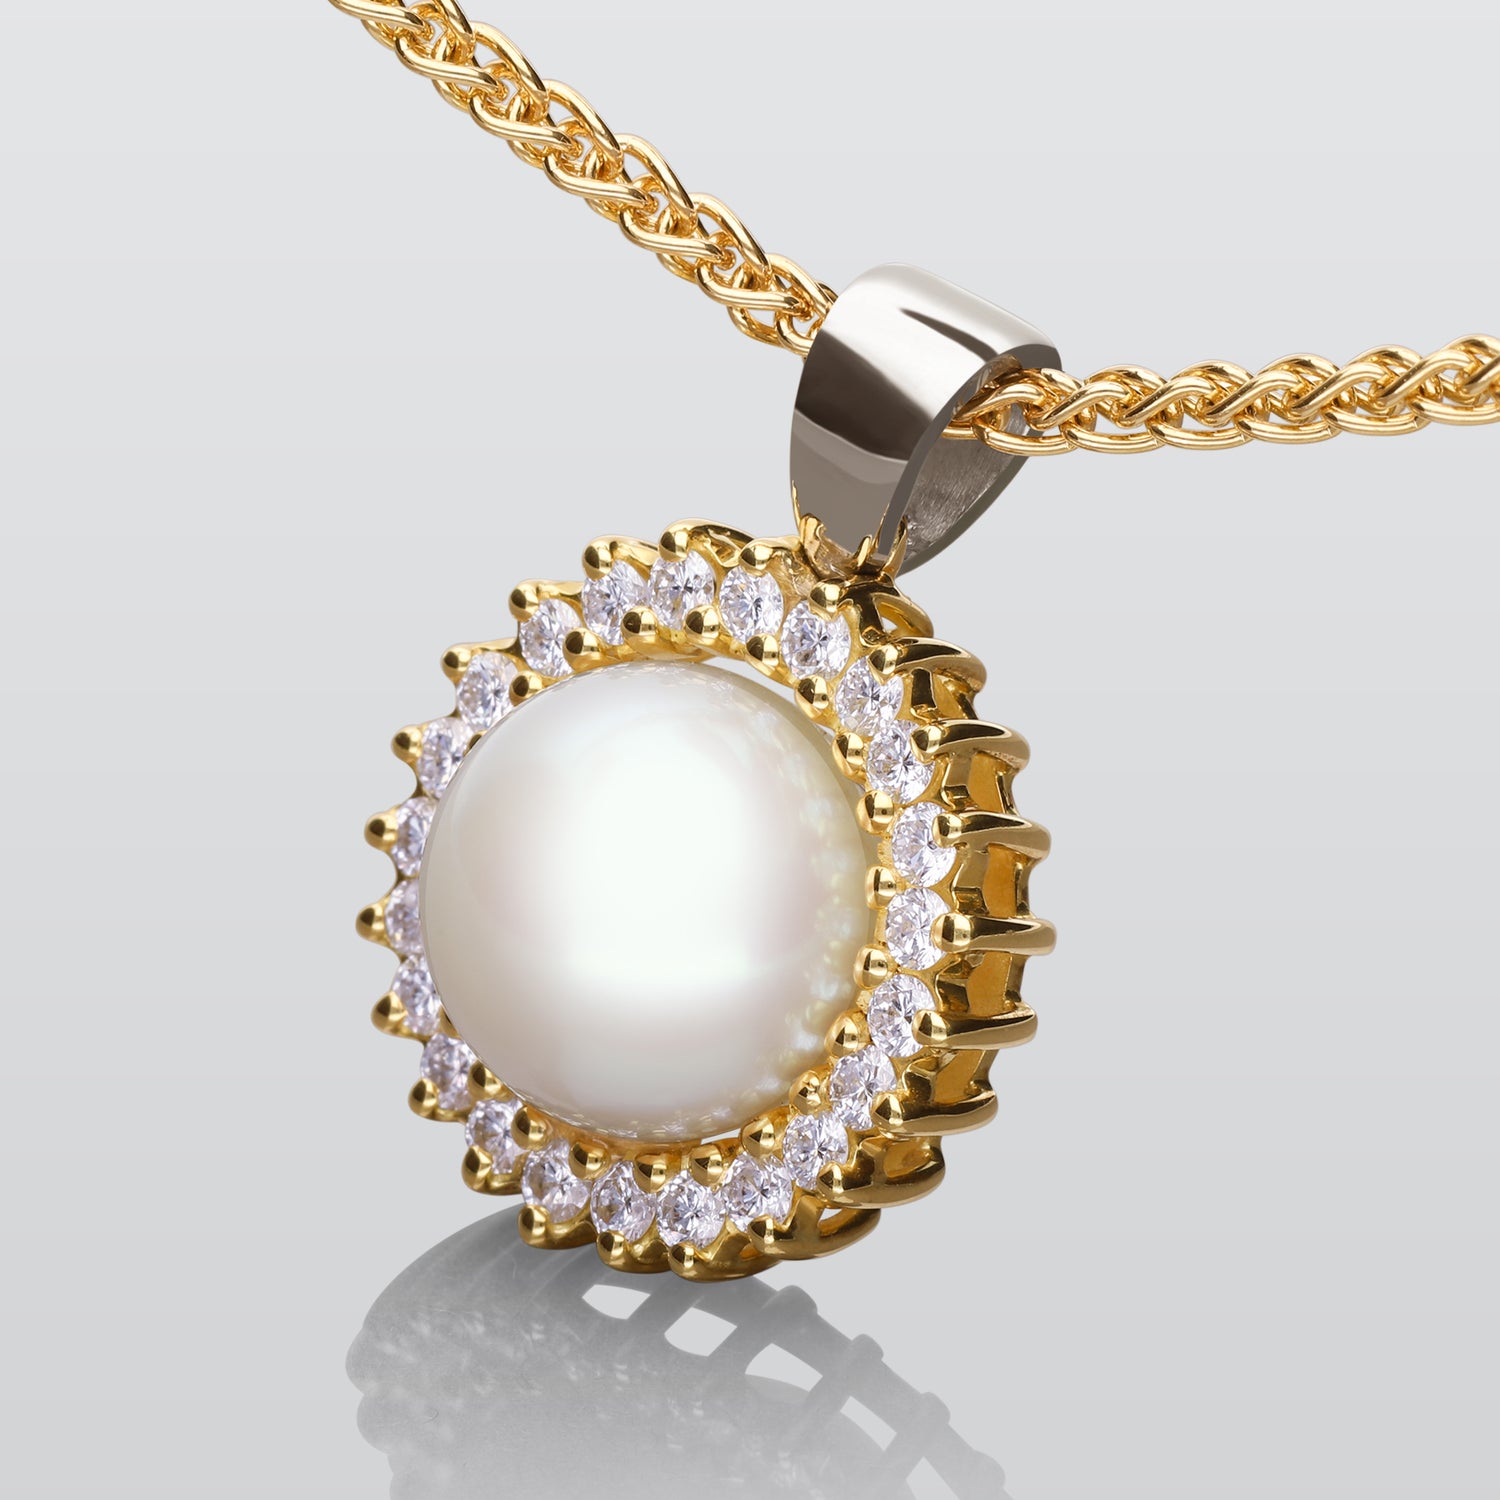 van Deijl Jewellery pearl necklace product photography